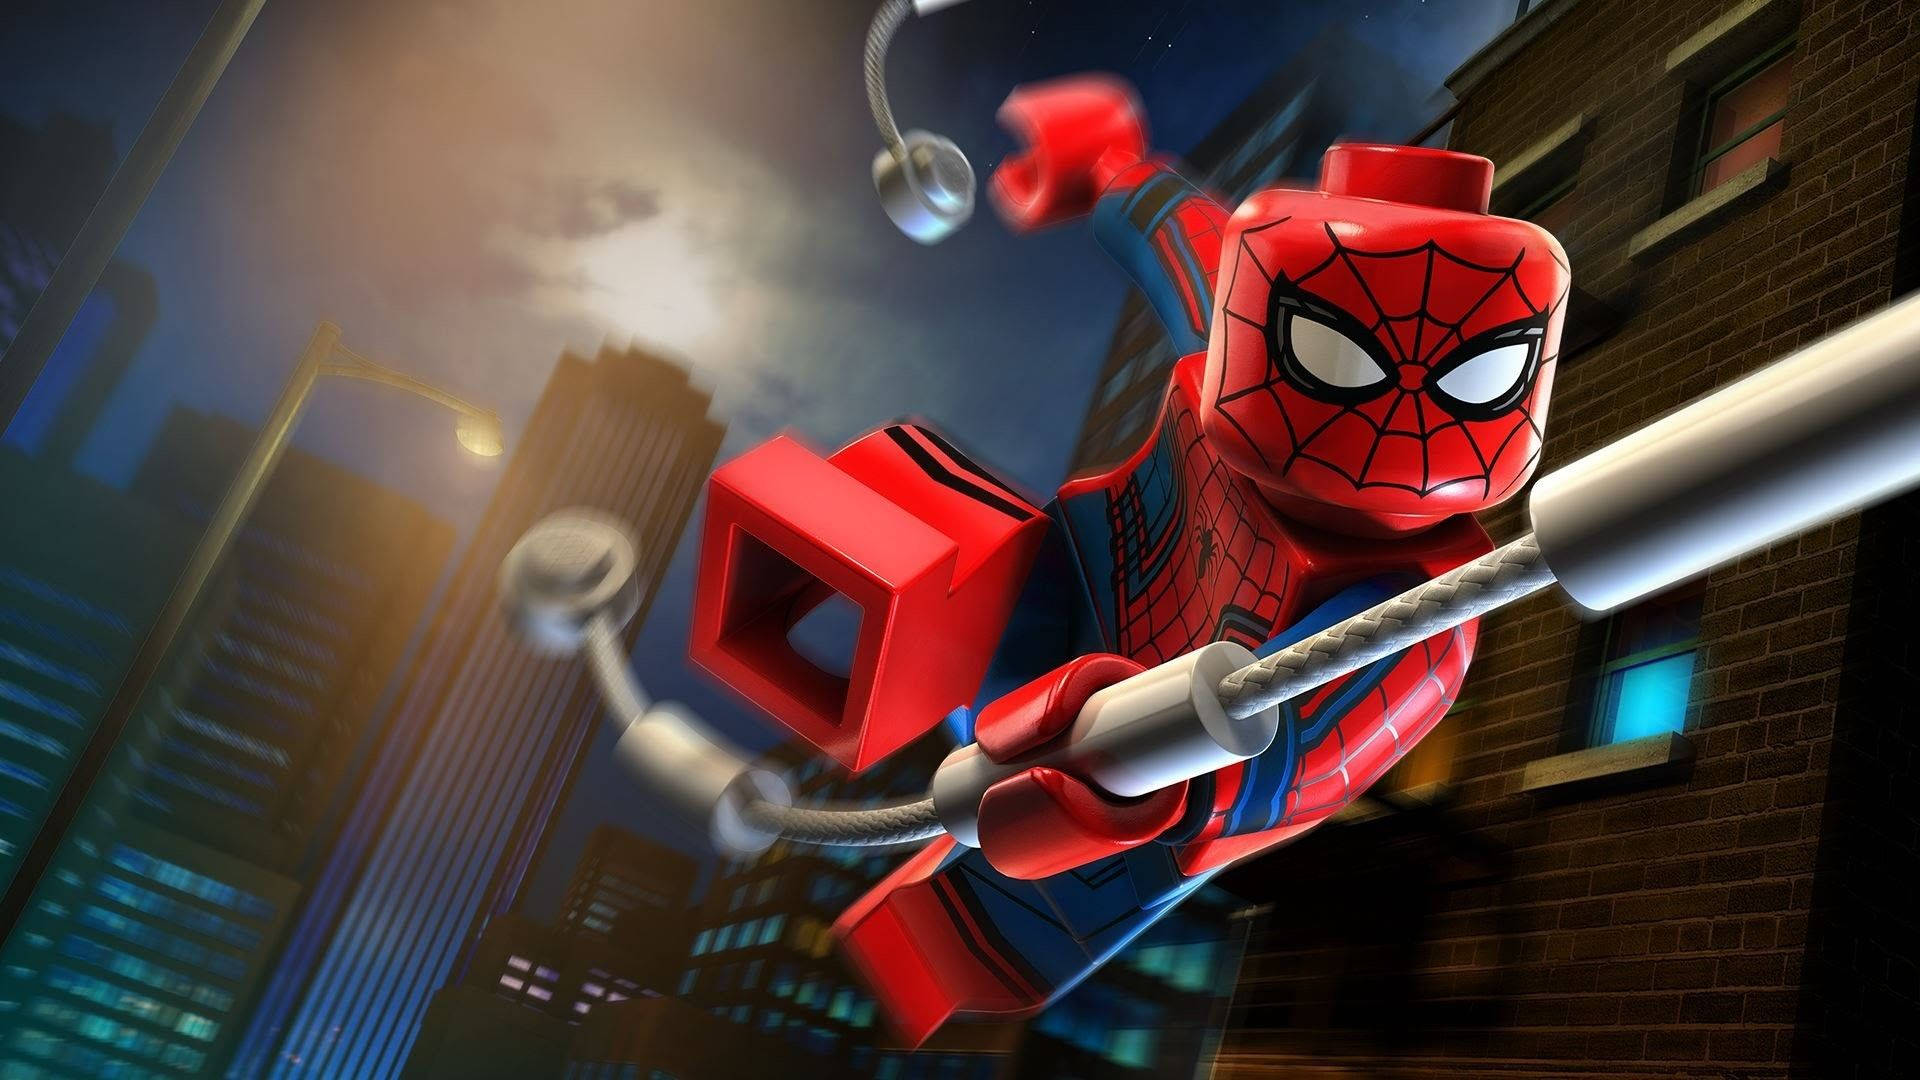 Iron Spiderman Lego Nighttime Cityscape